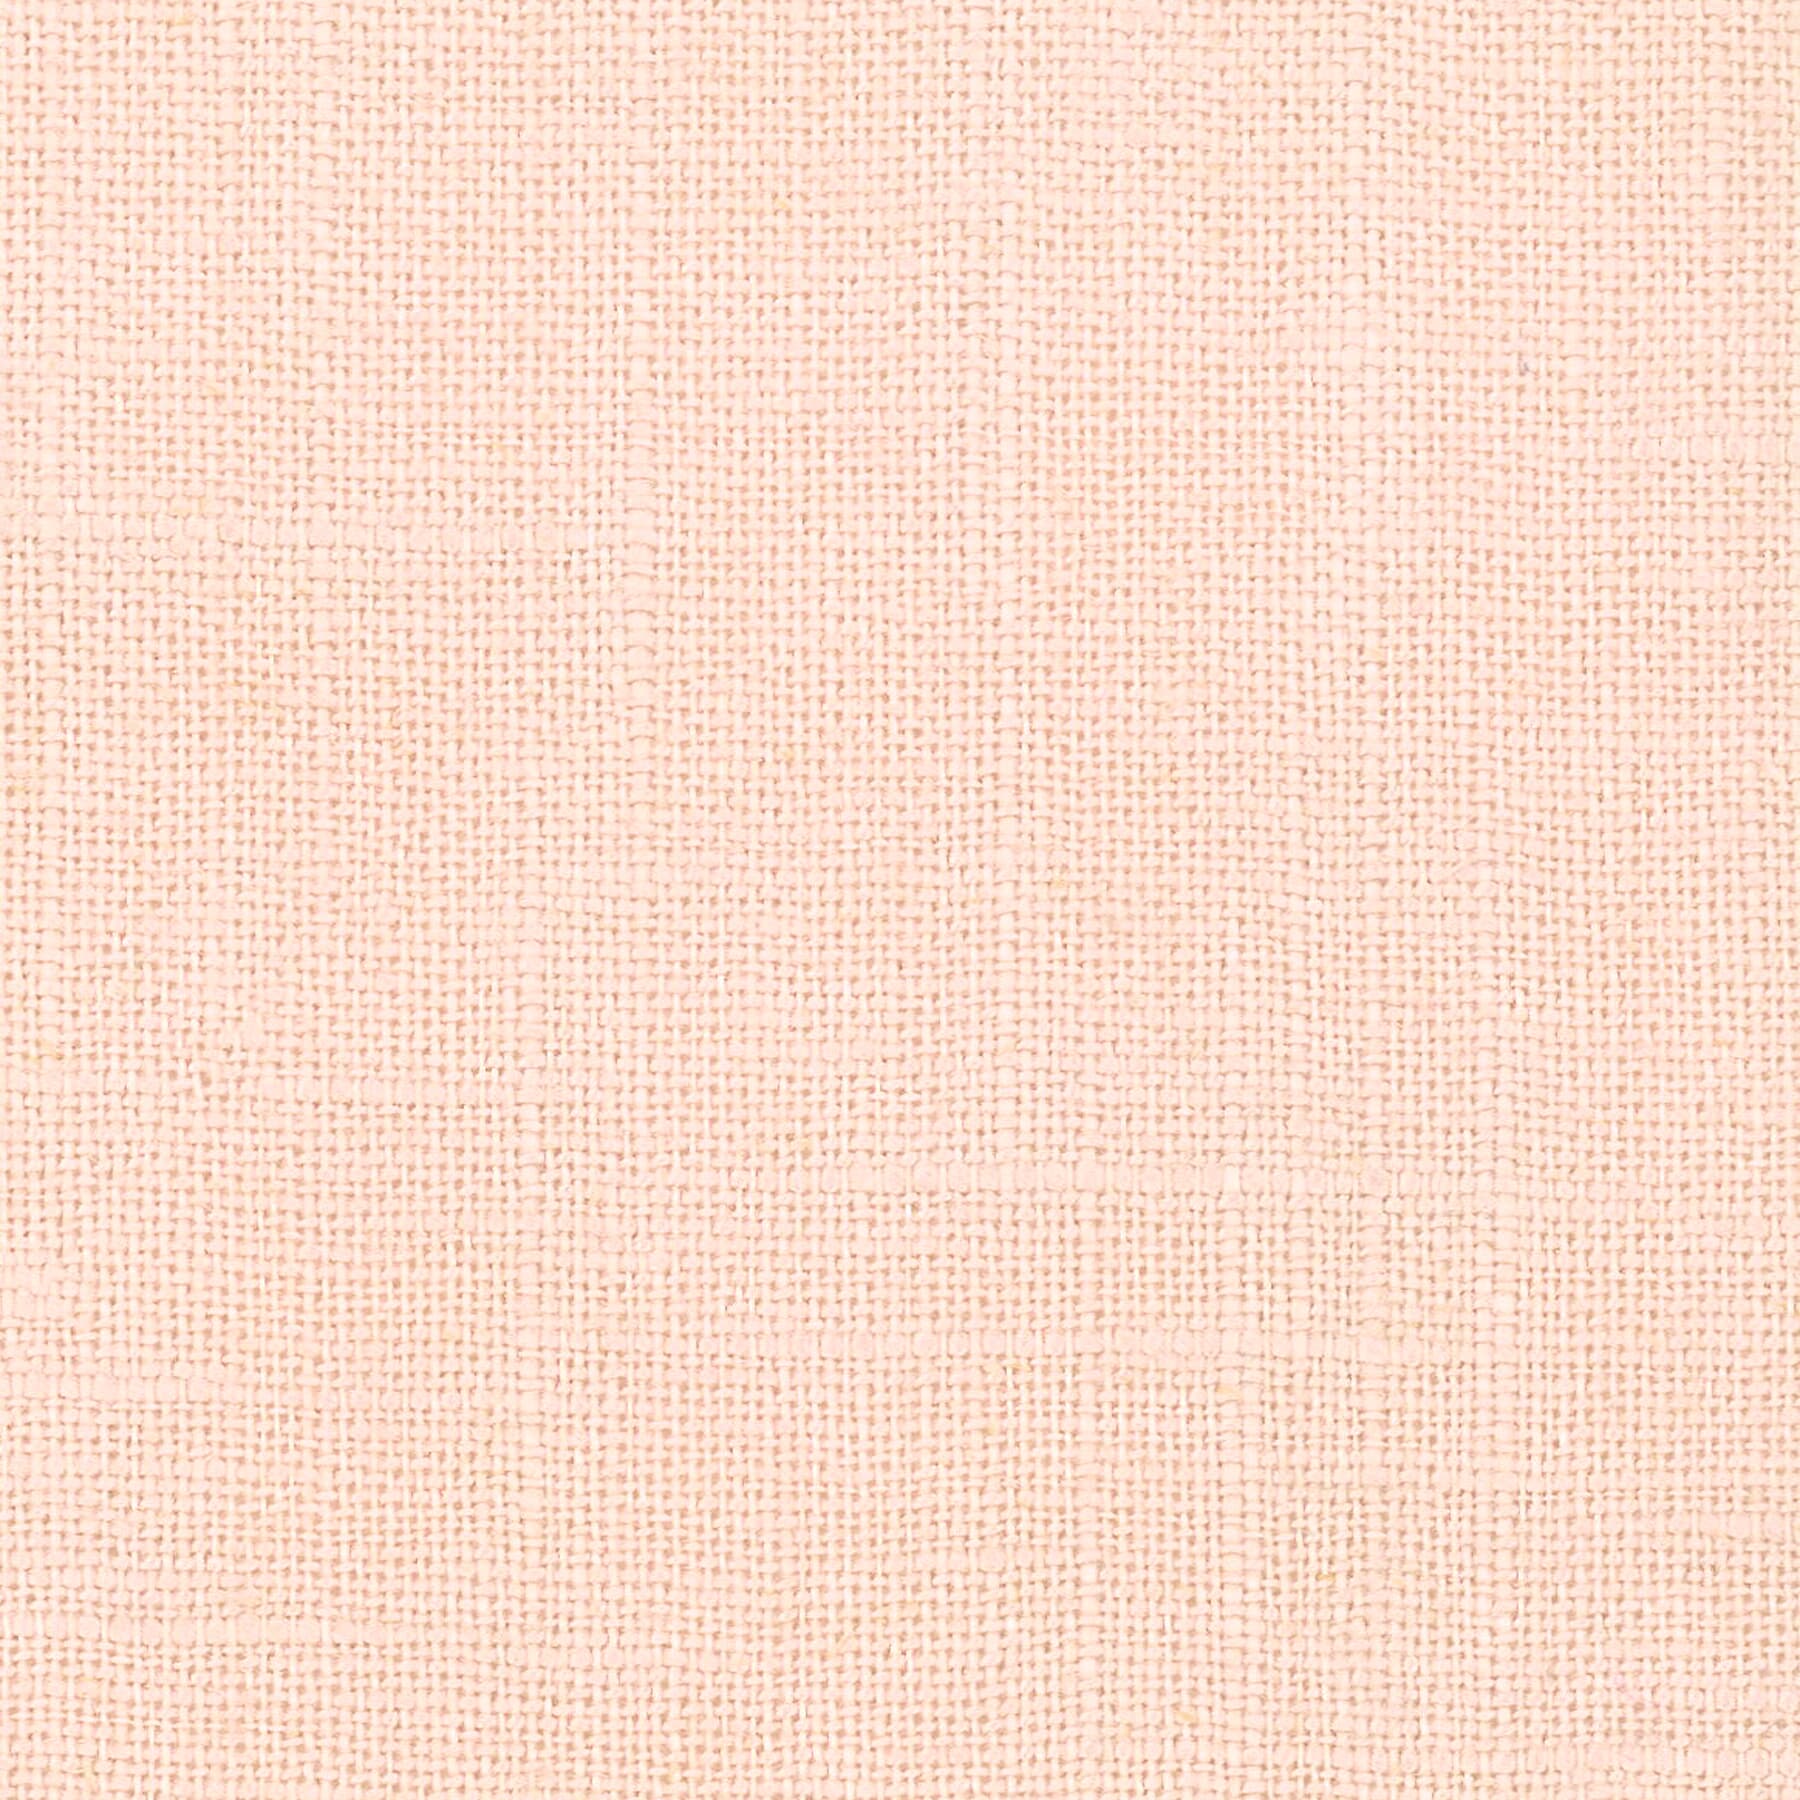 Ticonderoga 57 Blush by Stout Fabric